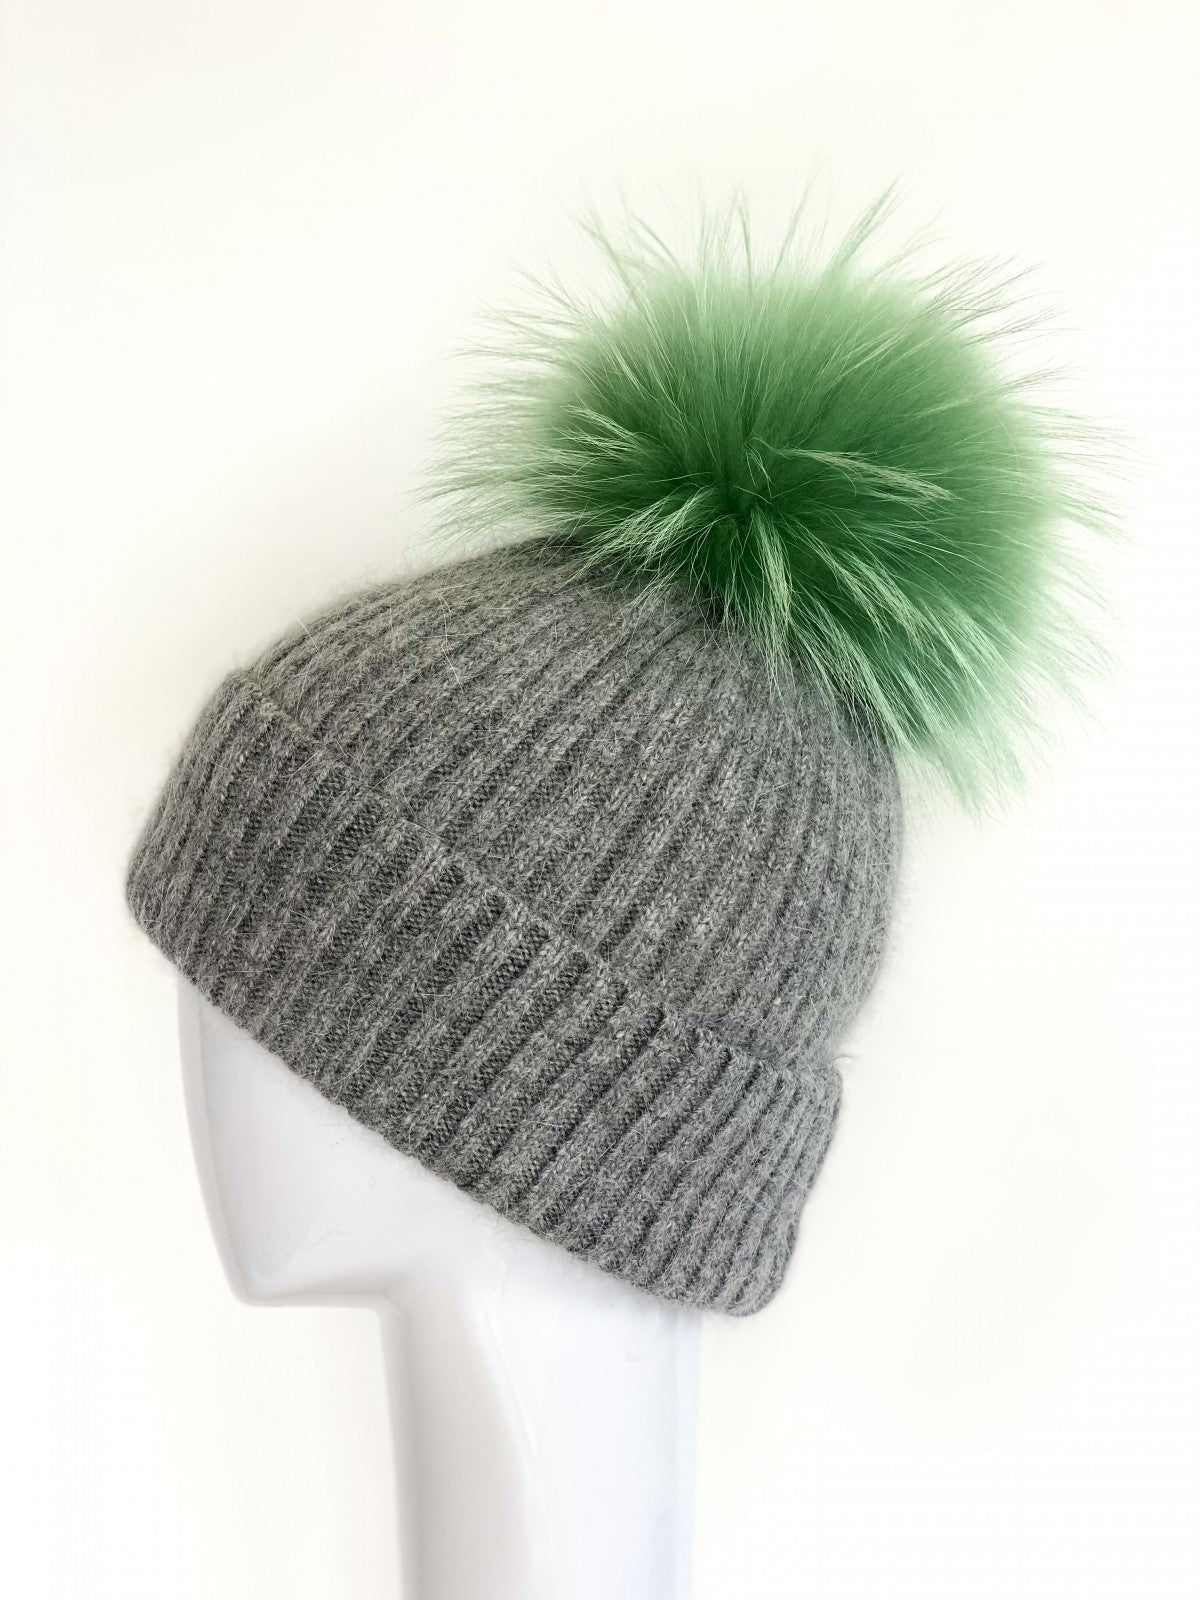 Angora/Wool Blend Hat in Mint